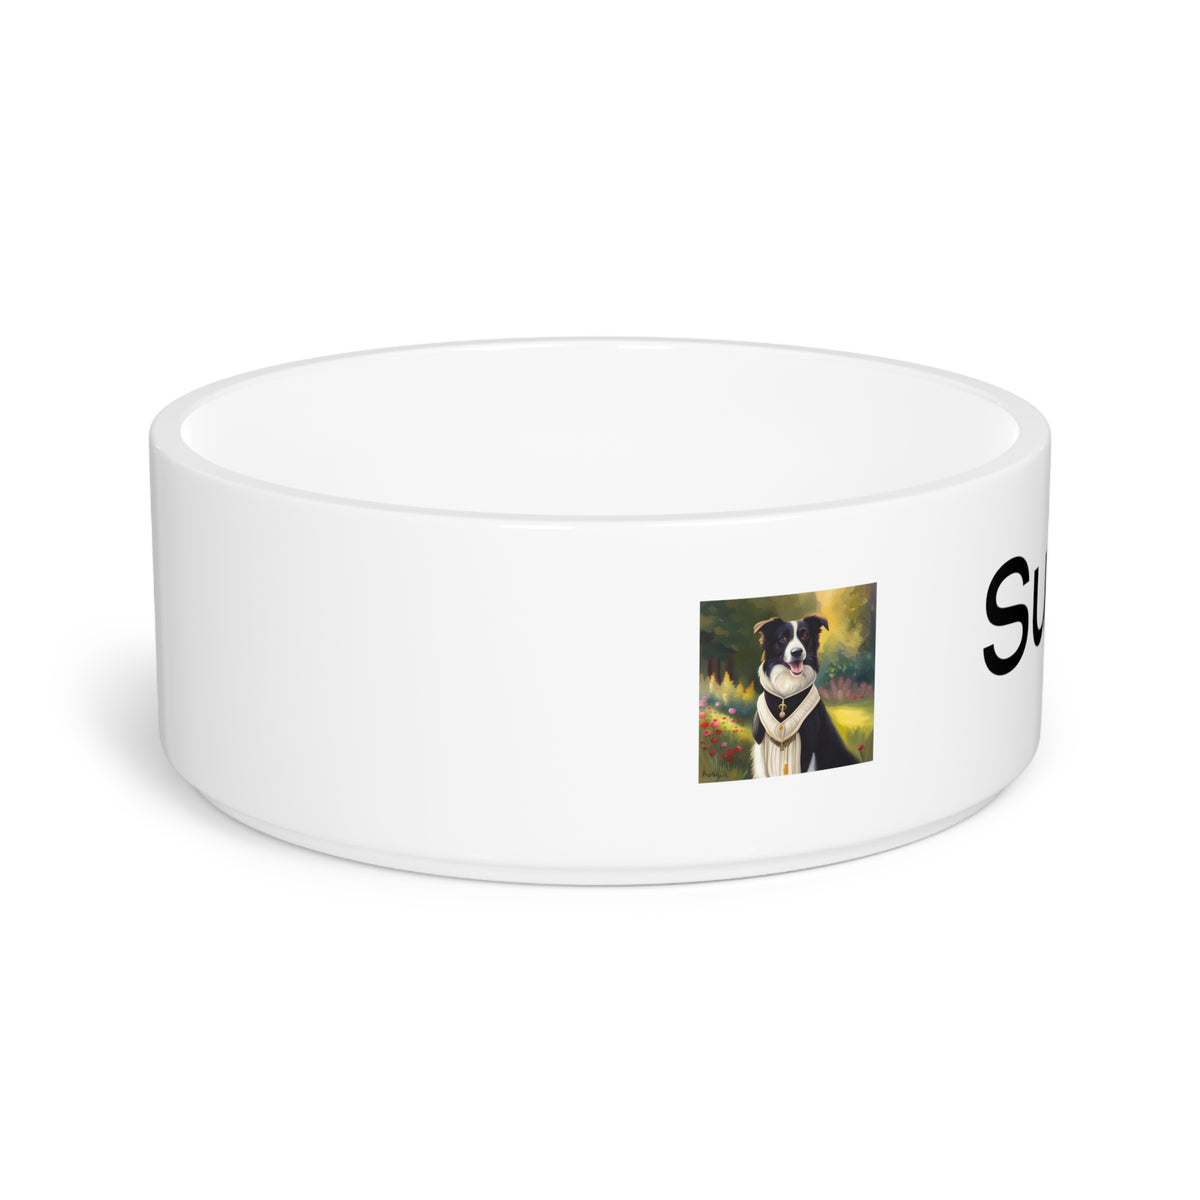 Personalized Ceramic Pet Bowl